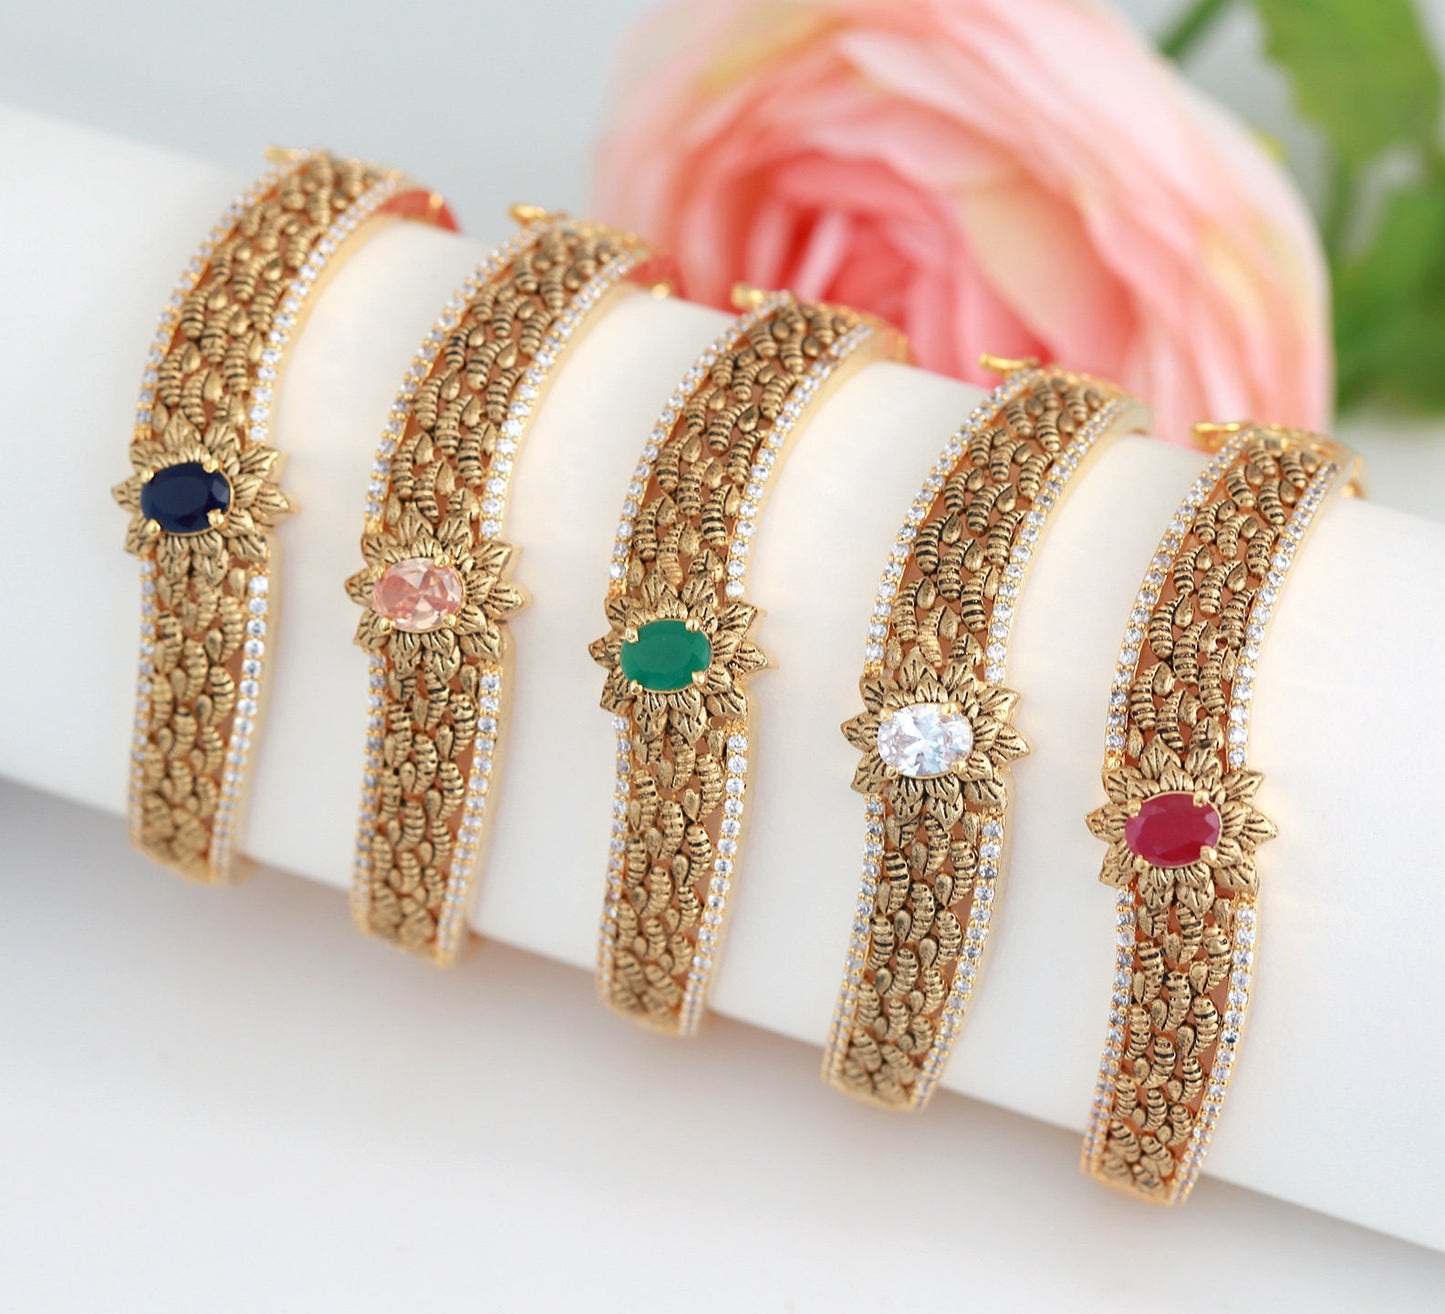 Gold plated AD stone bangle | colored stone bangle bracelet | openable kada bangle | ruby stone bracelet | Emerald Green stone Bangle design